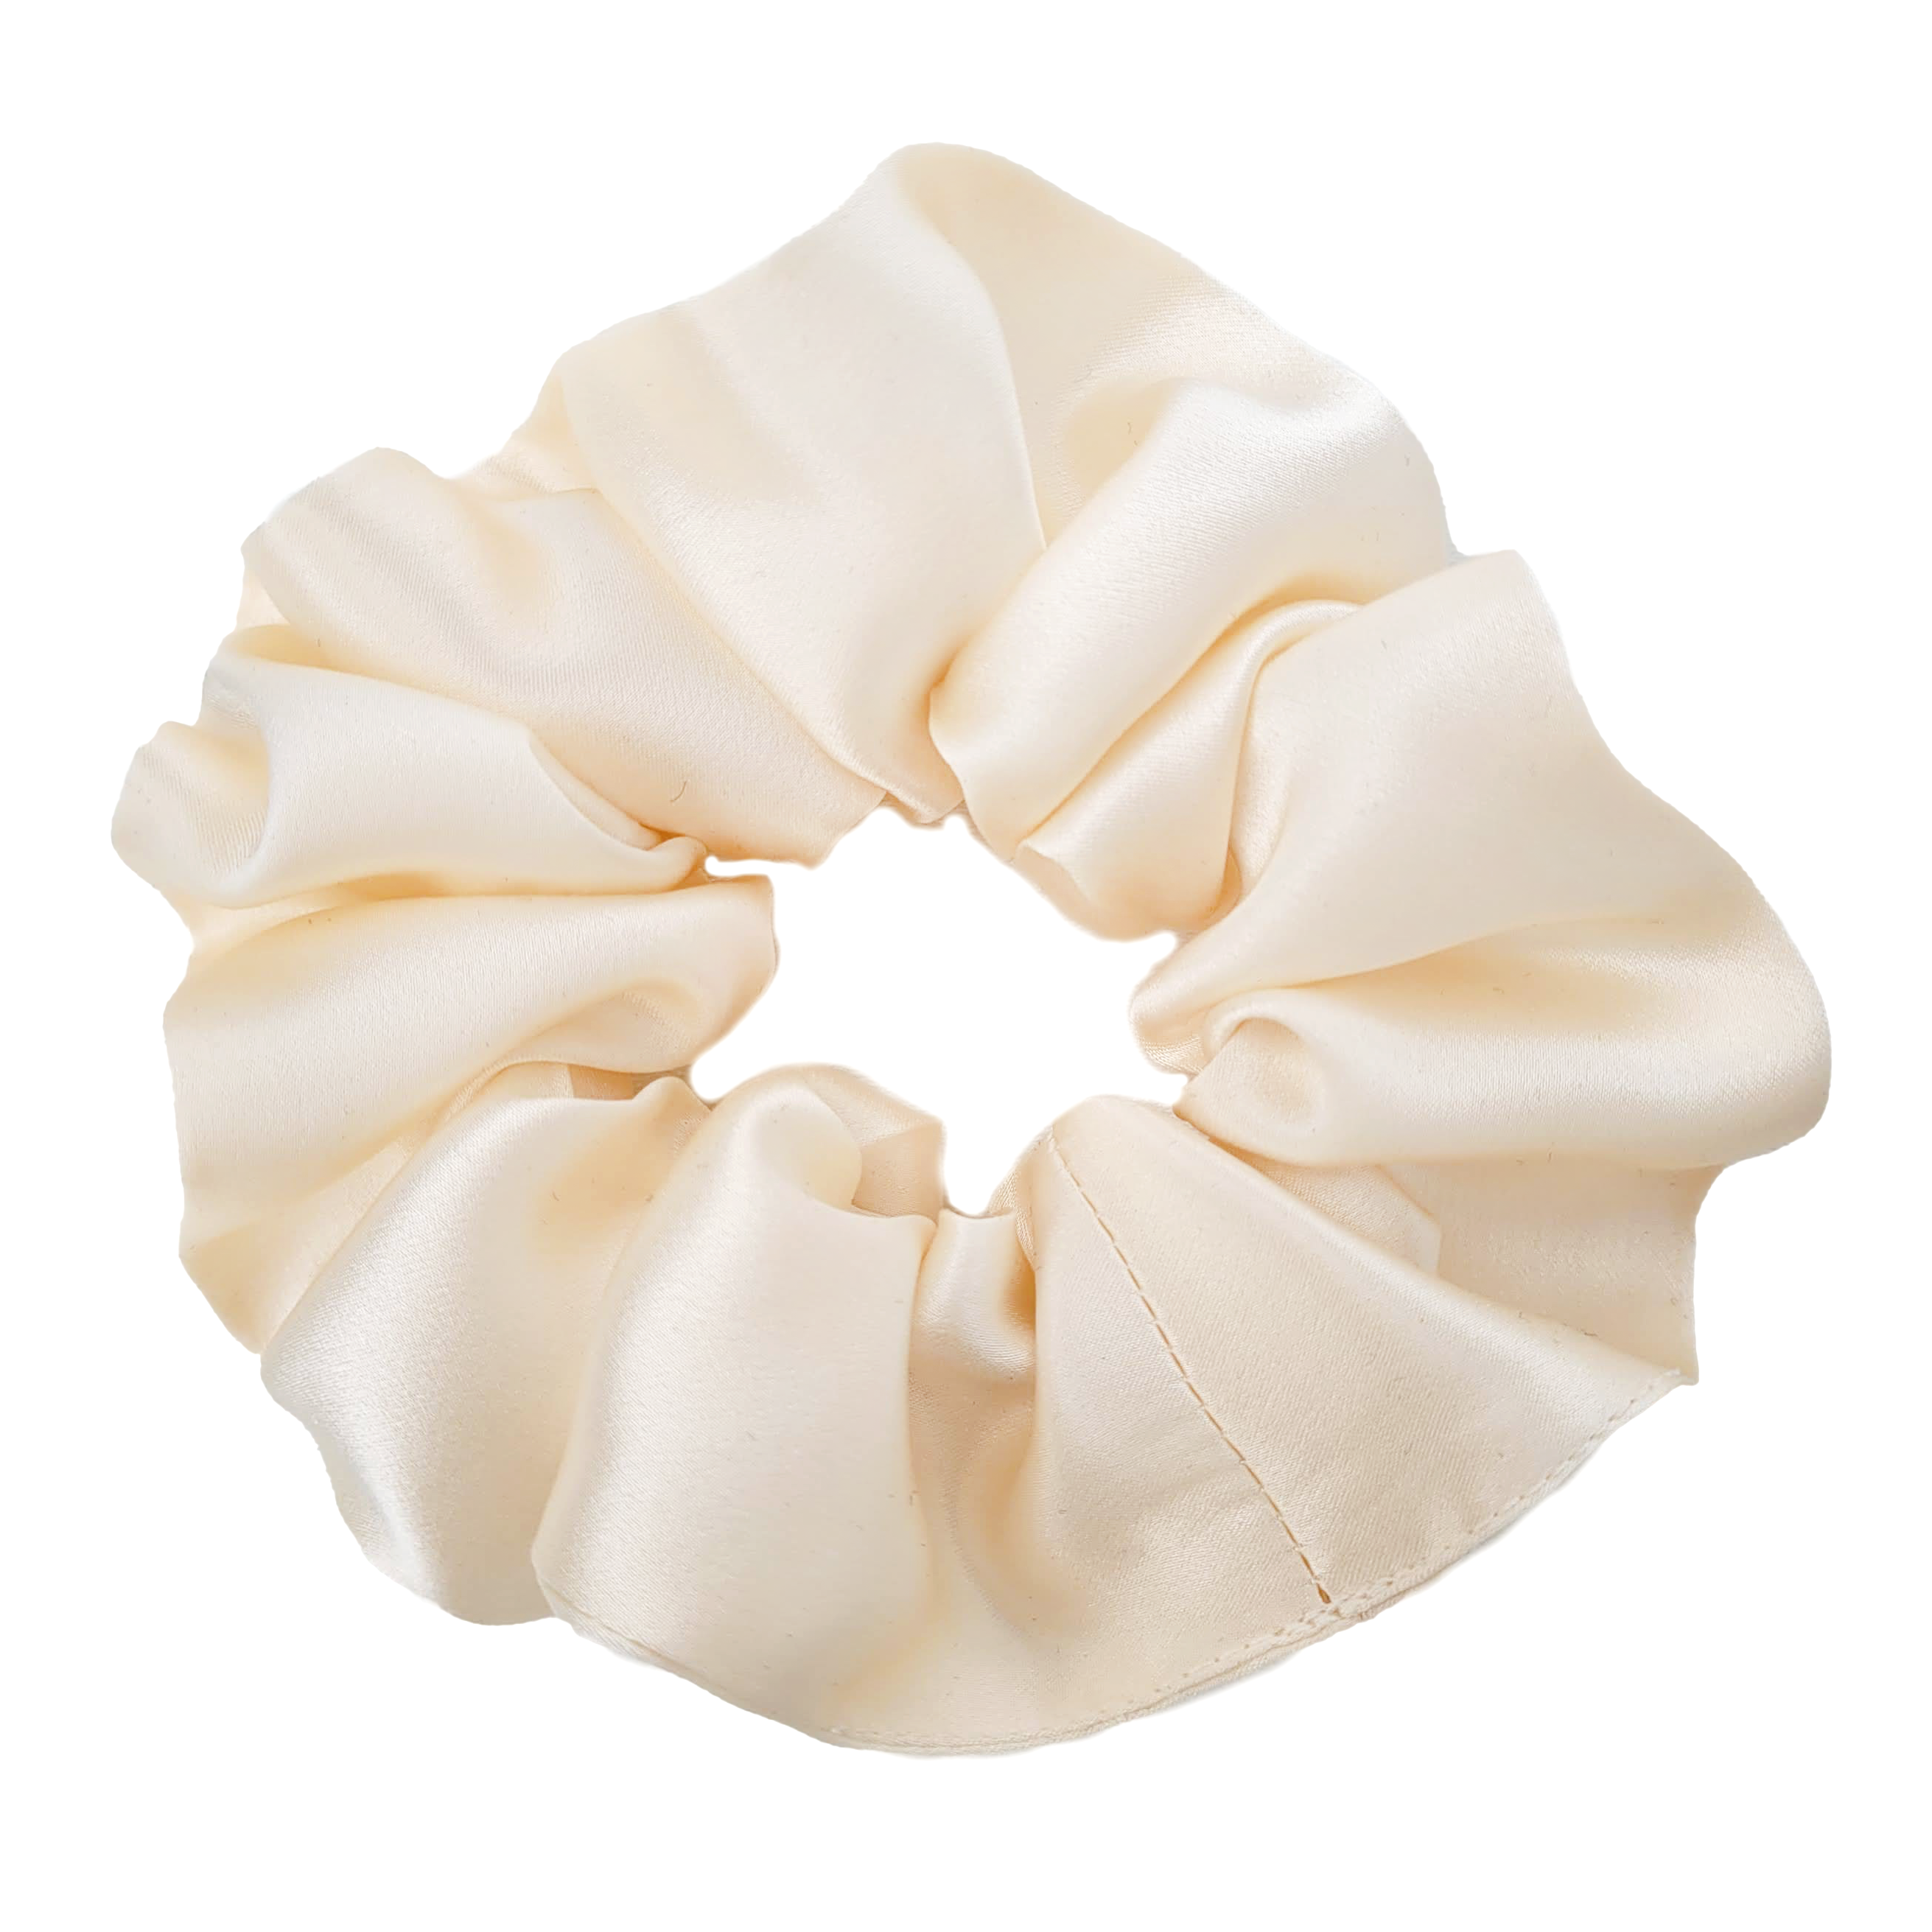 Medium size scrunchie pure silk ivory satin ponytail holder hair tie handmade in Canada by Lynne Kiel